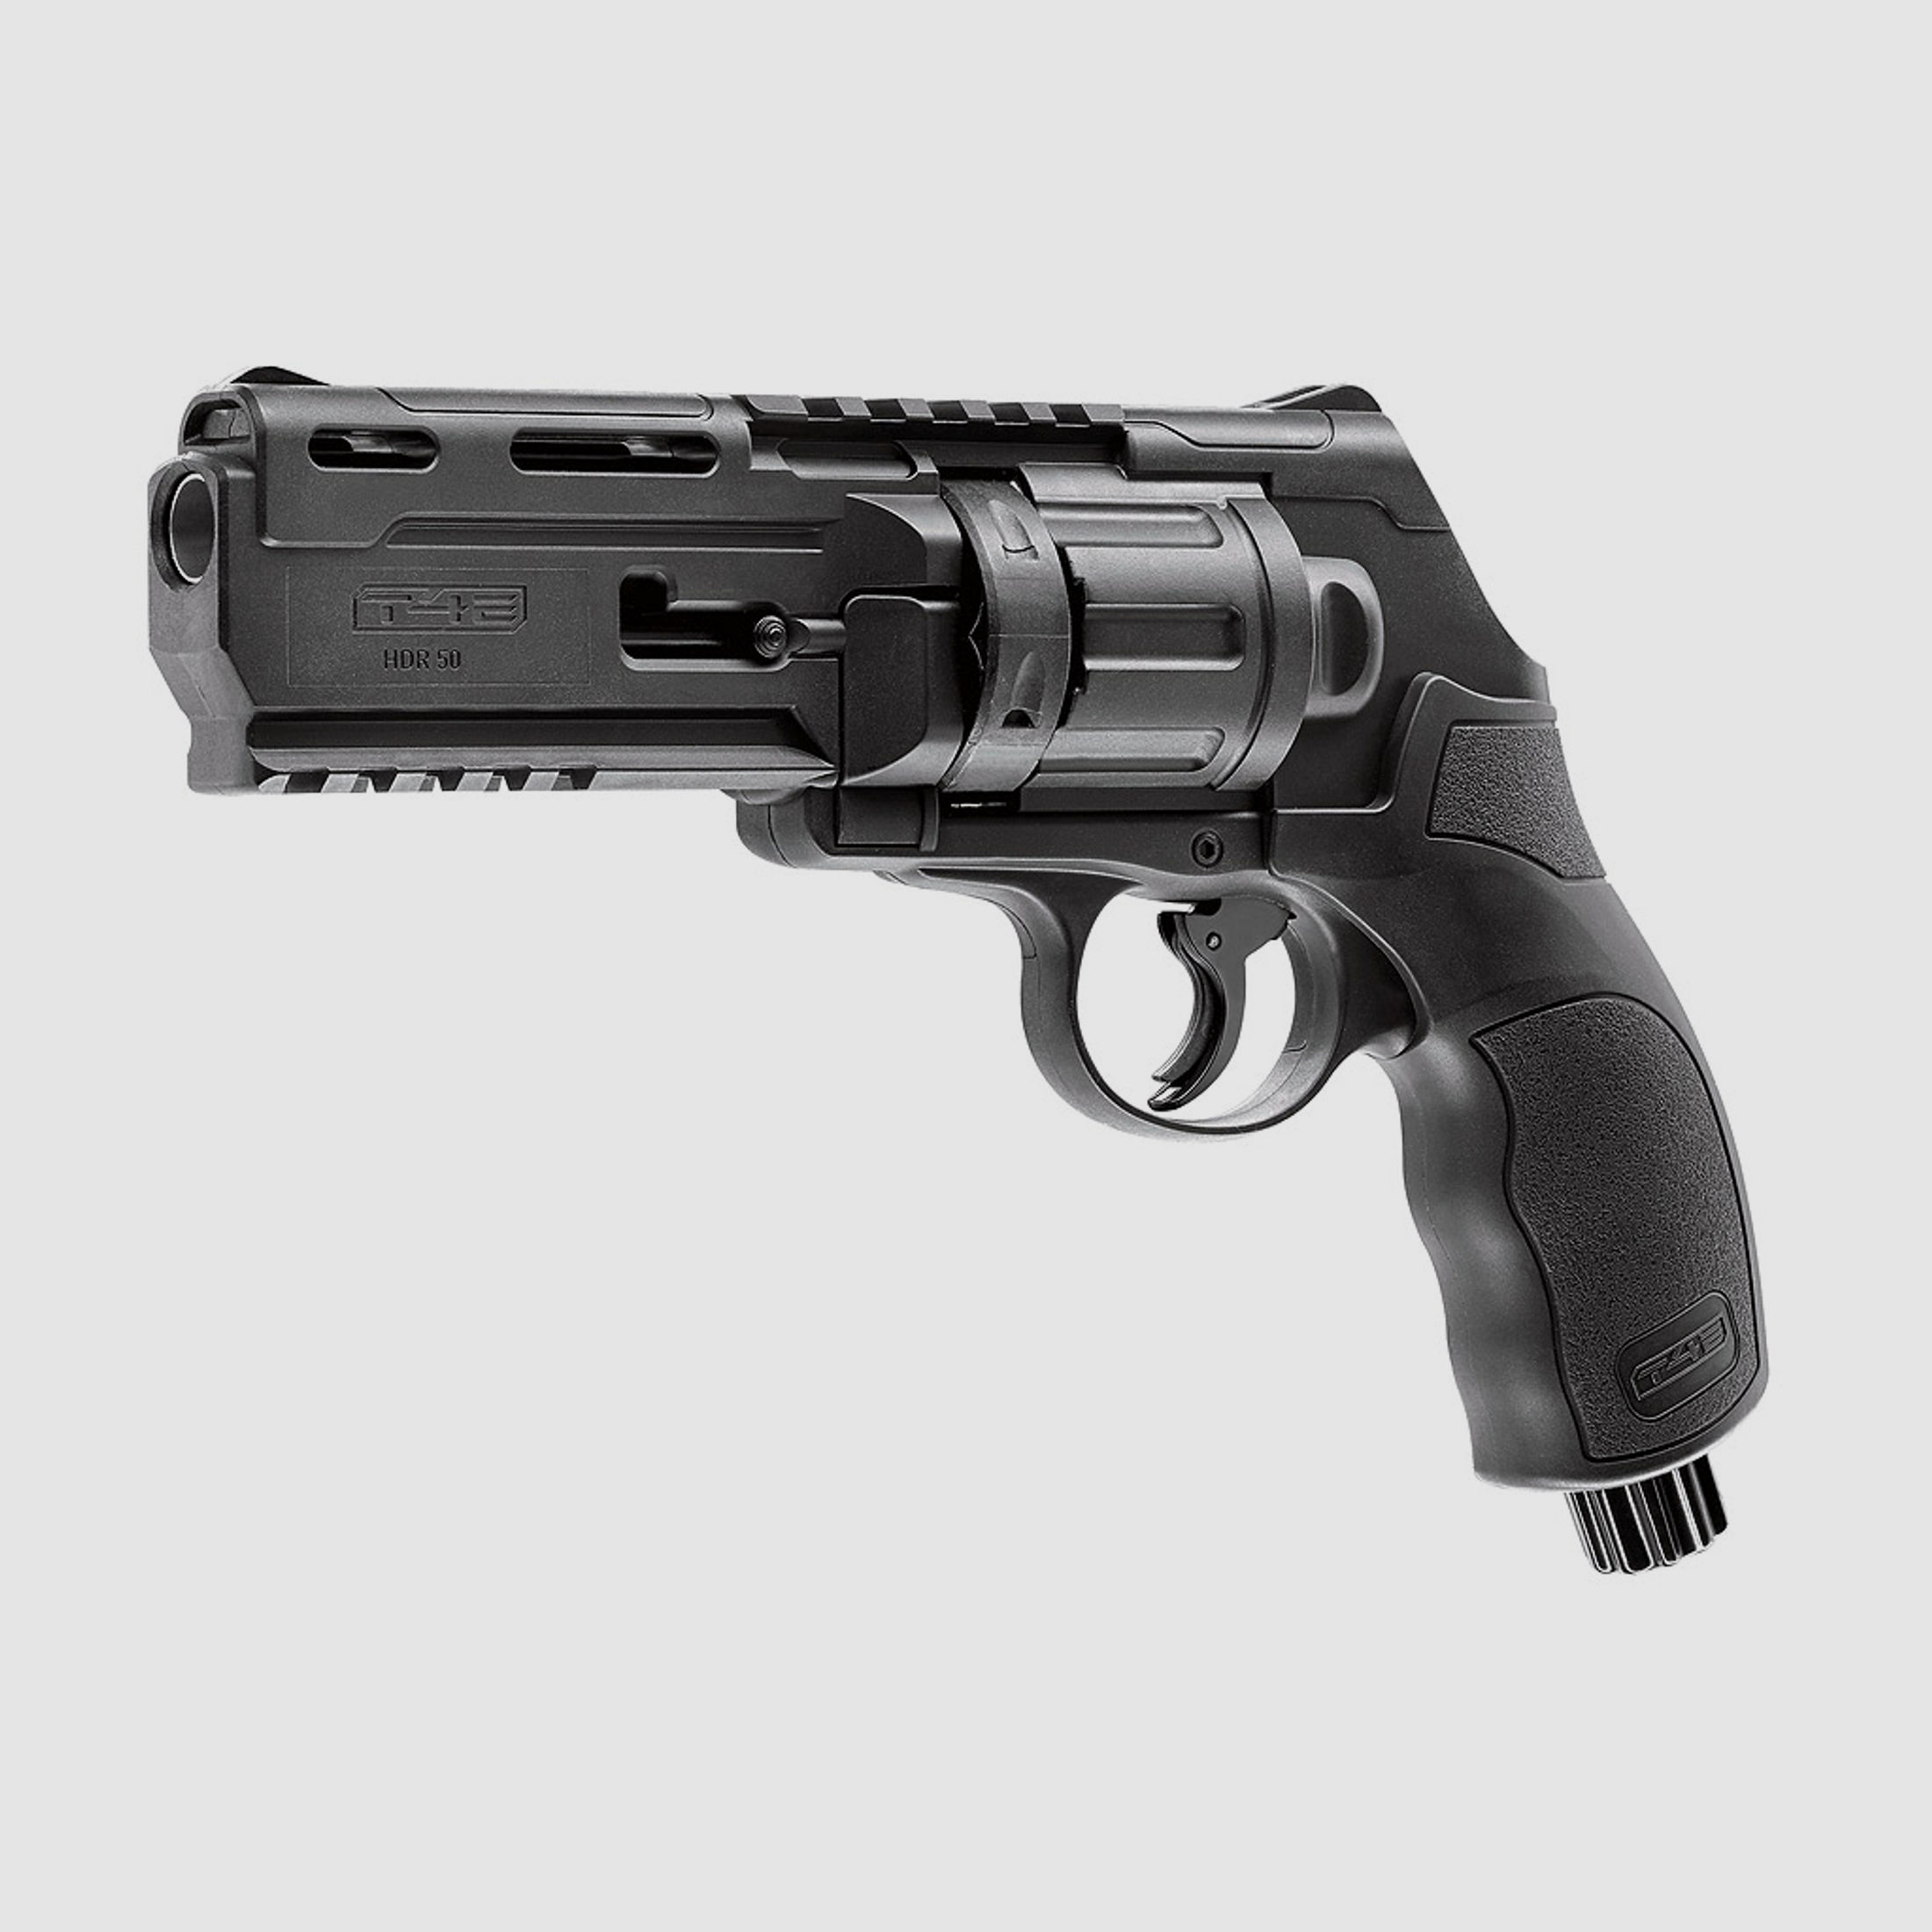 CO2 Markierer Home Defense Revolver Umarex T4E HDR 50 fĂĽr Gummi-, Pfeffer- u. Farbkugeln Kaliber .50 (P18) + 100 Rubberballs und 10 CO2 Kapseln